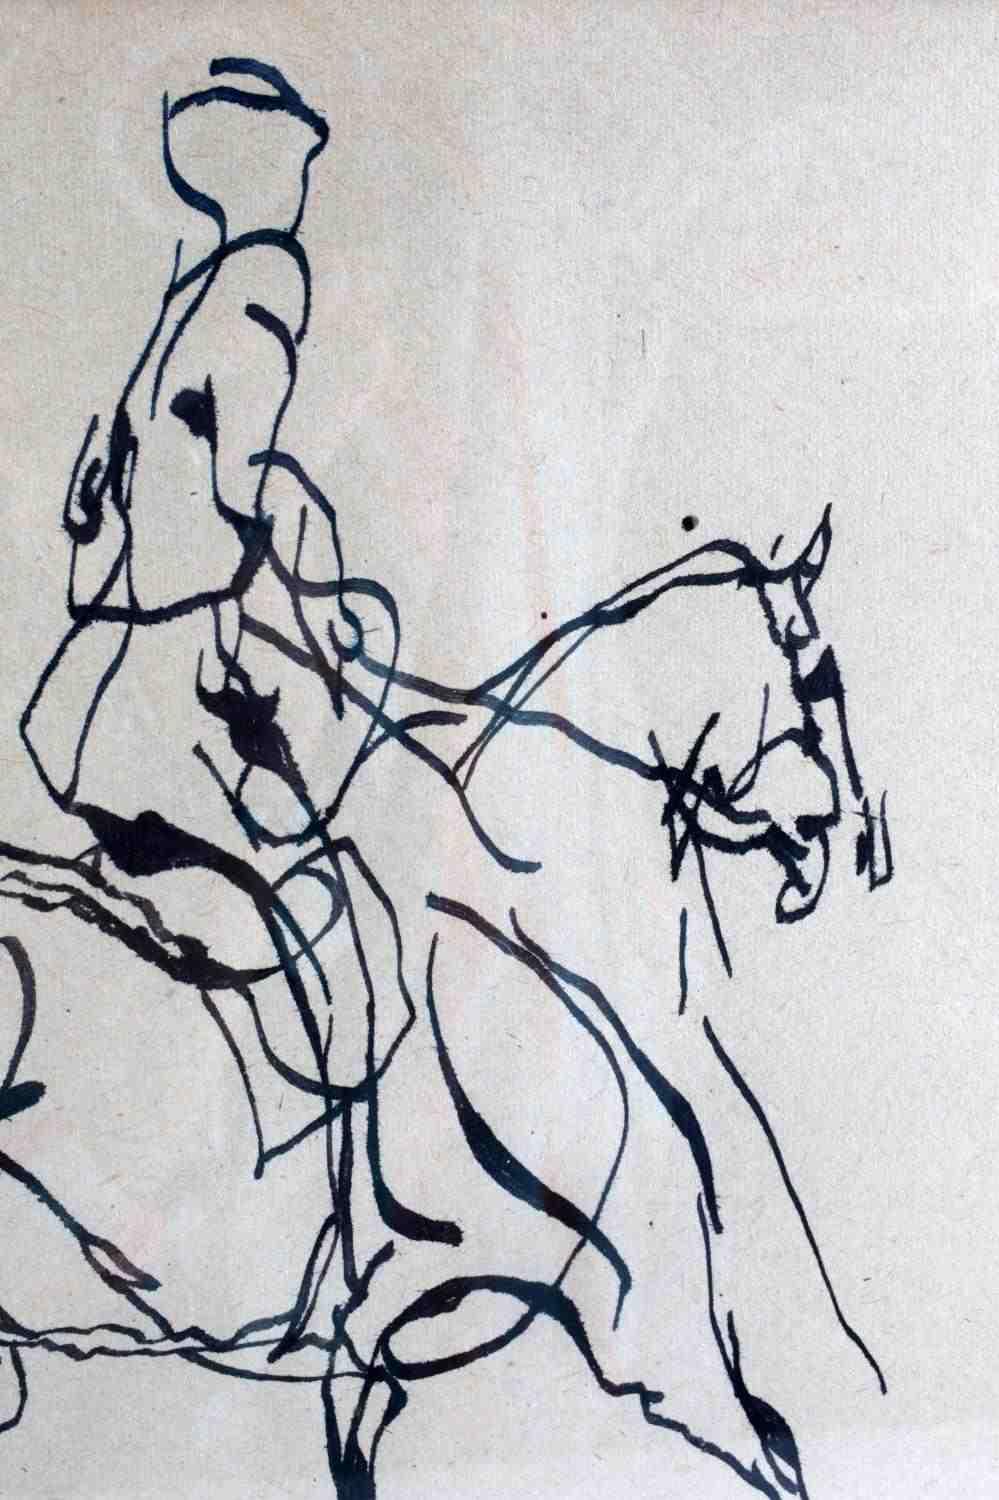 KAROL KOSSAK ORIGINAL INK HORSE W RIDER